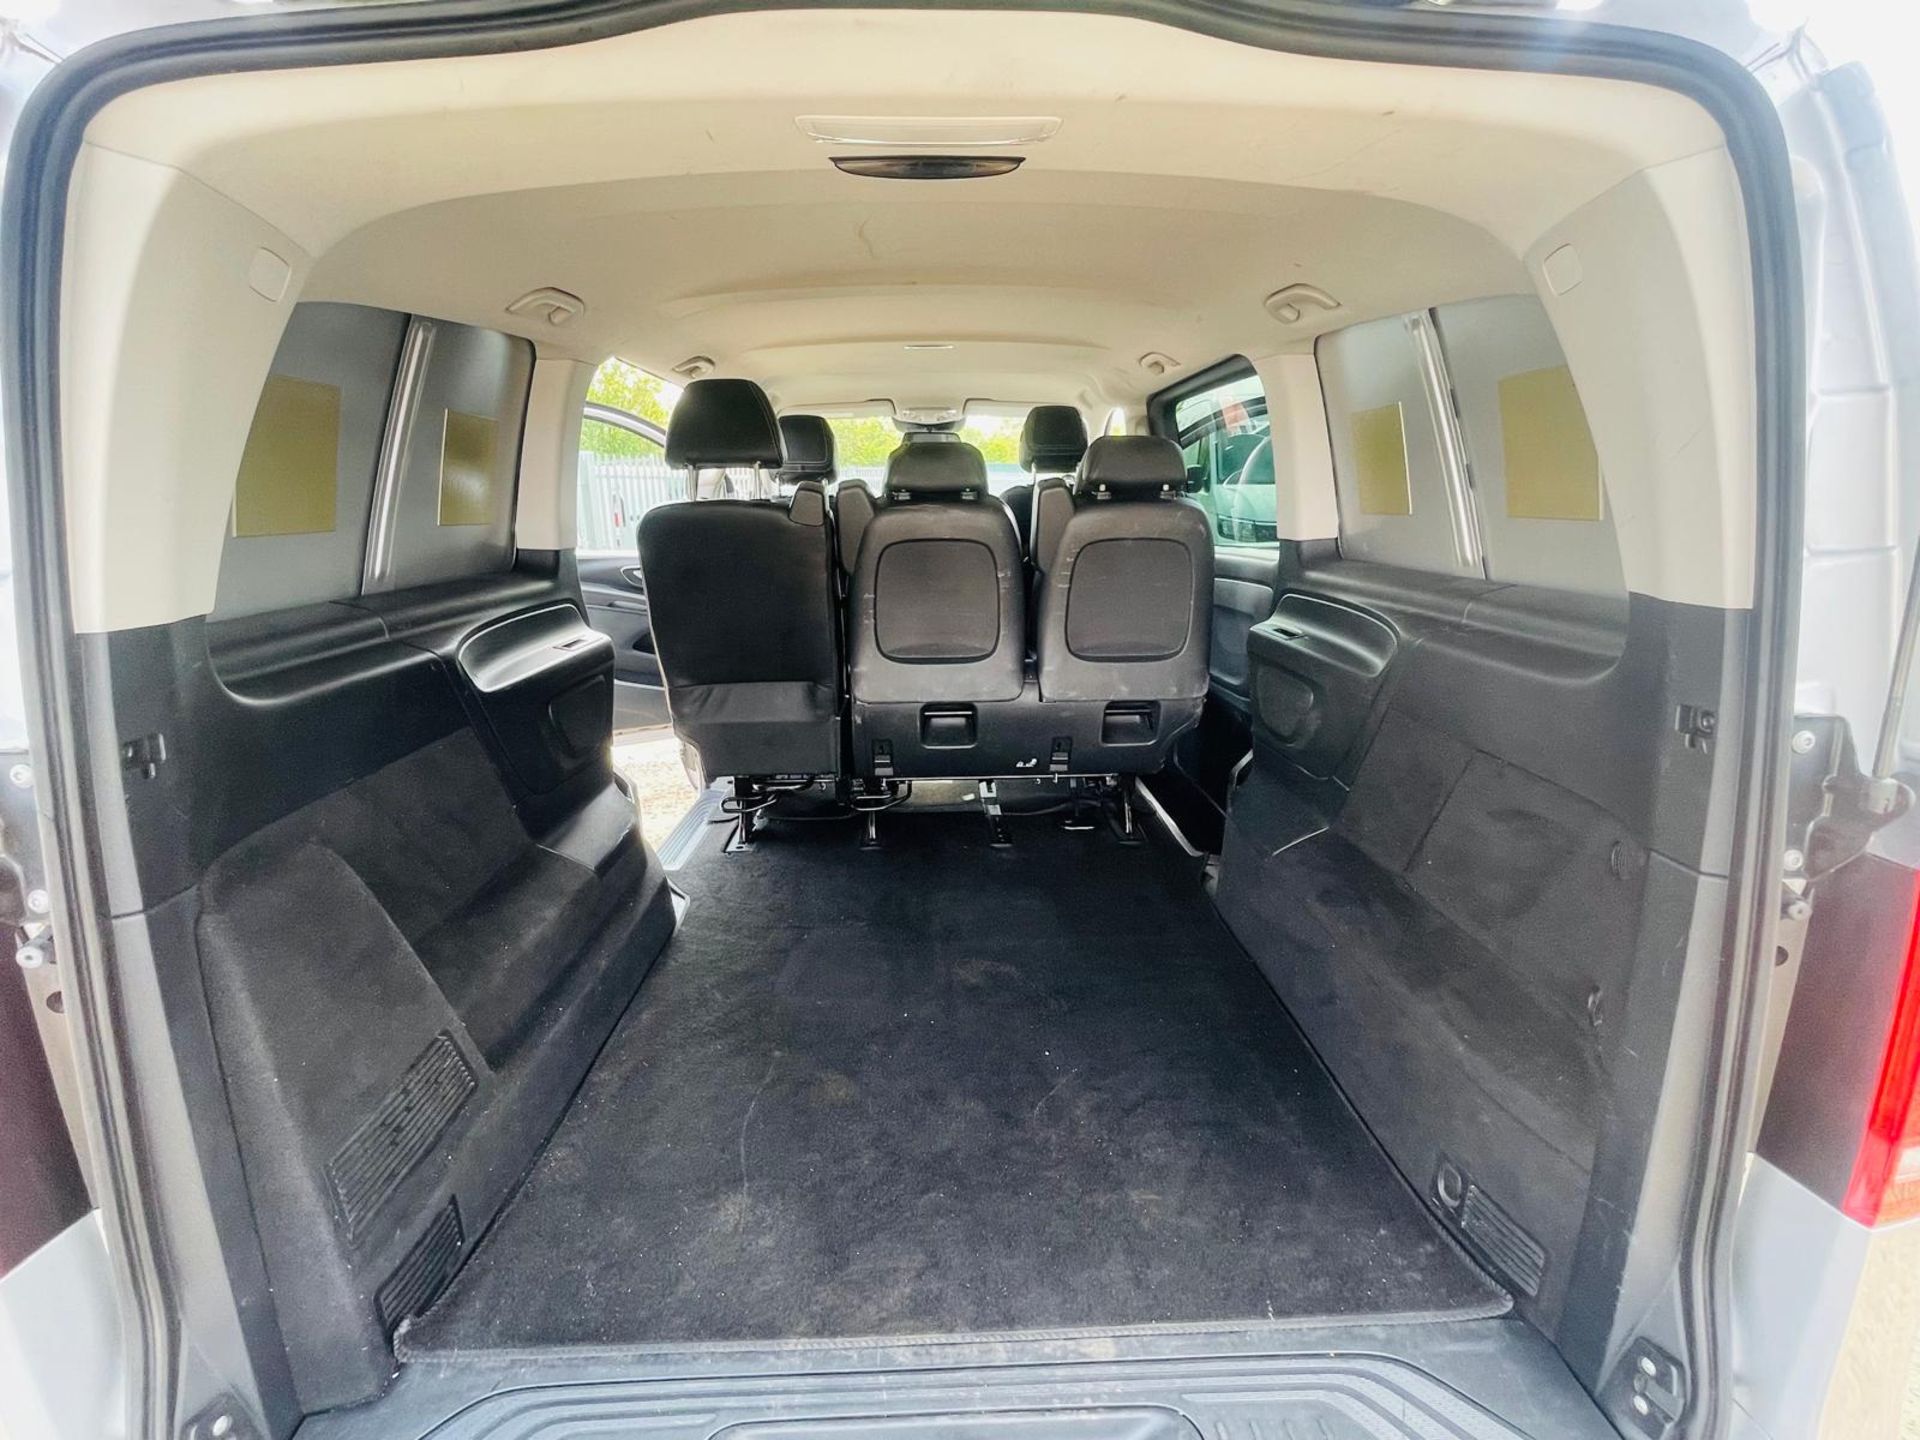 Mercedes-Benz Vito Premium 2.1 119 CDI 7G Tronic Crew Cab LWB Automatic 2019'19 Reg'- Alloy Wheels - Image 9 of 31